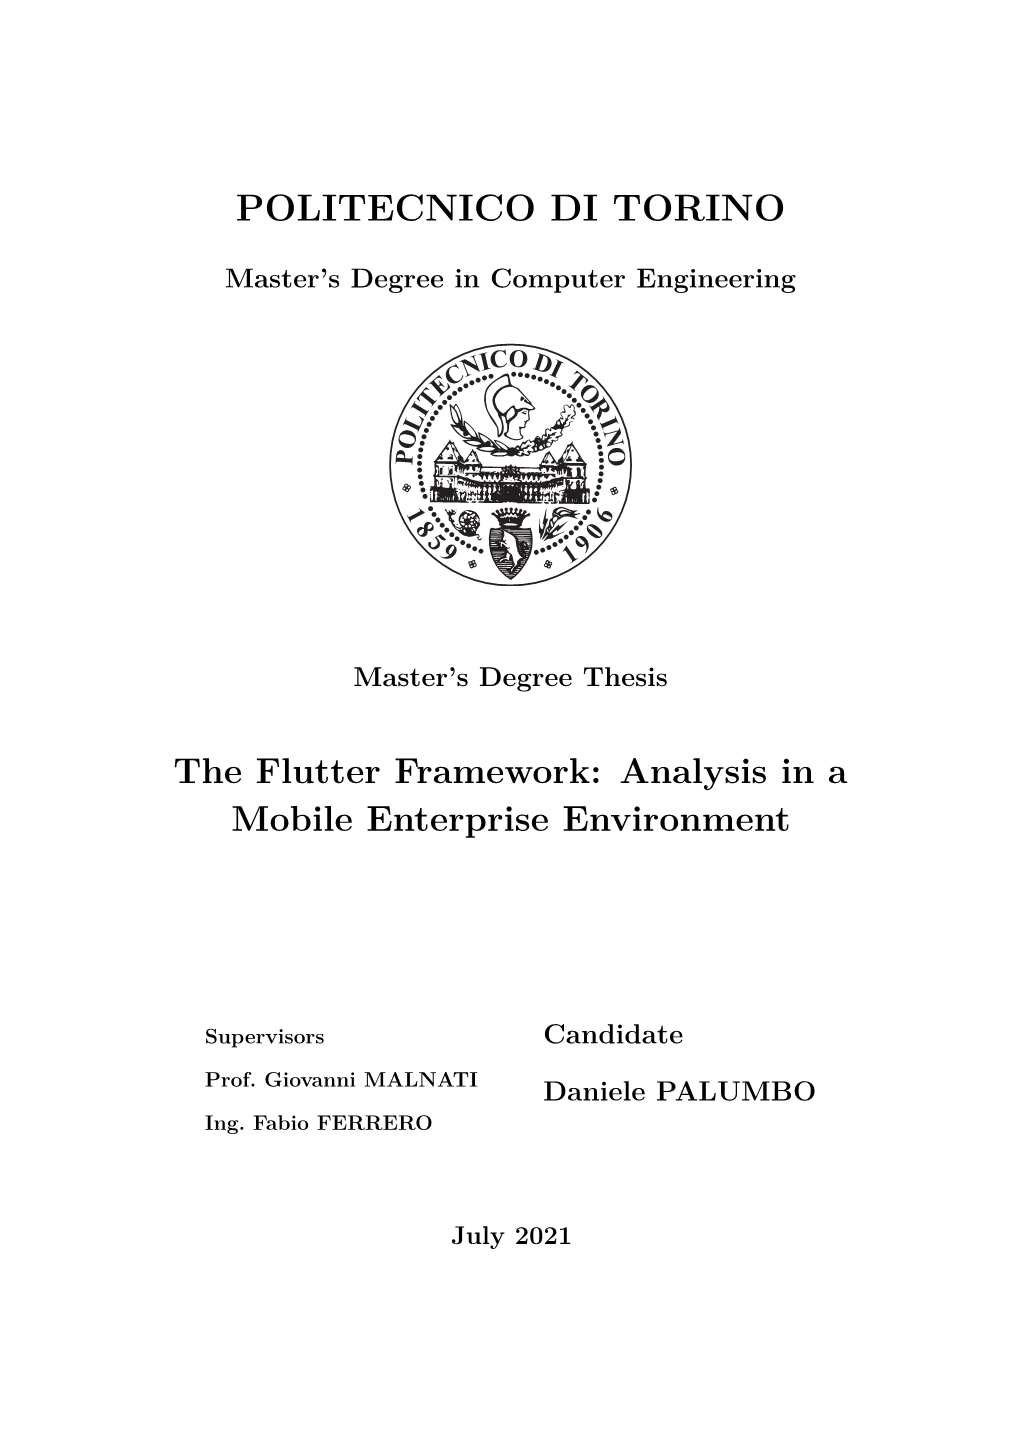 The Flutter Framework: Analysis in a Mobile Enterprise Environment